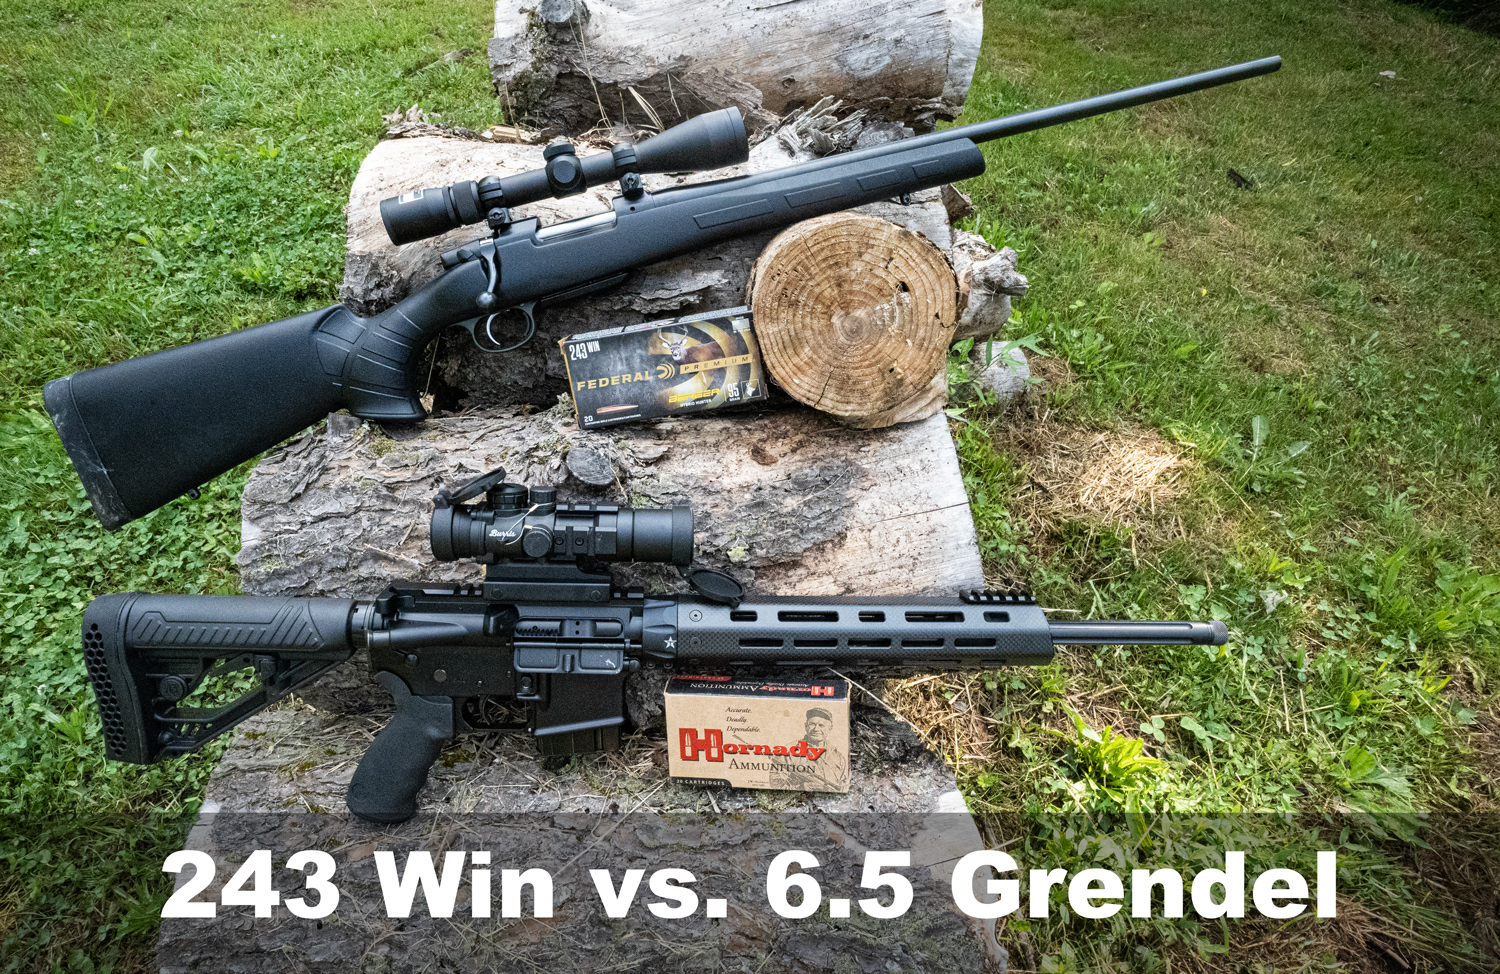 243 vs 6.5 Grendel at a shooting range on display